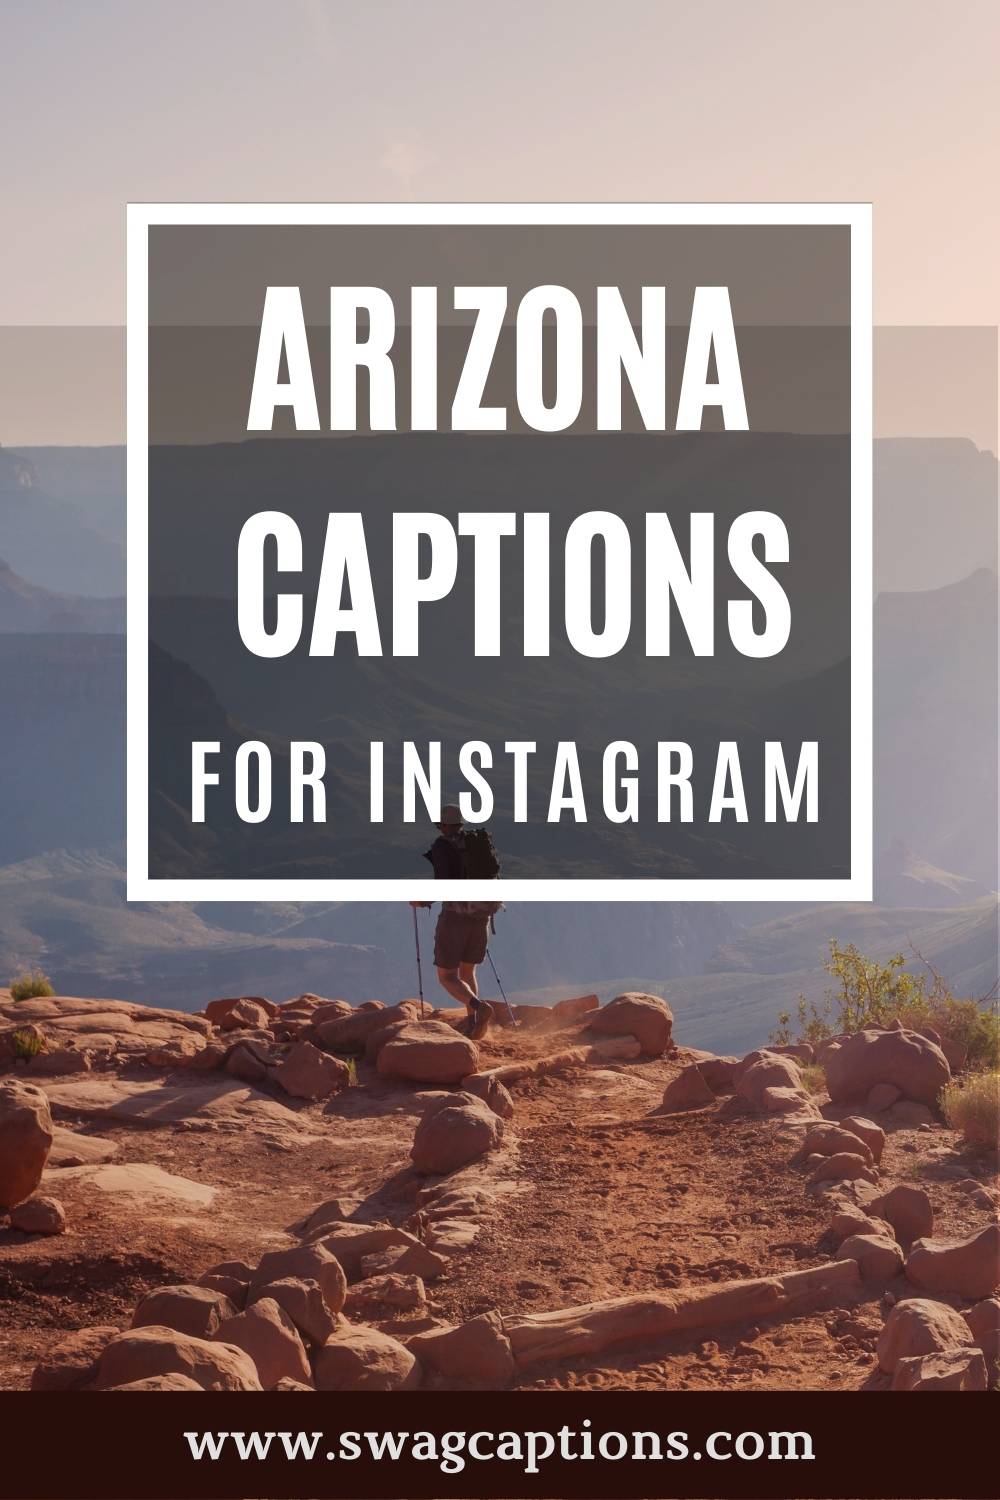 Arizona Captions For Instagram